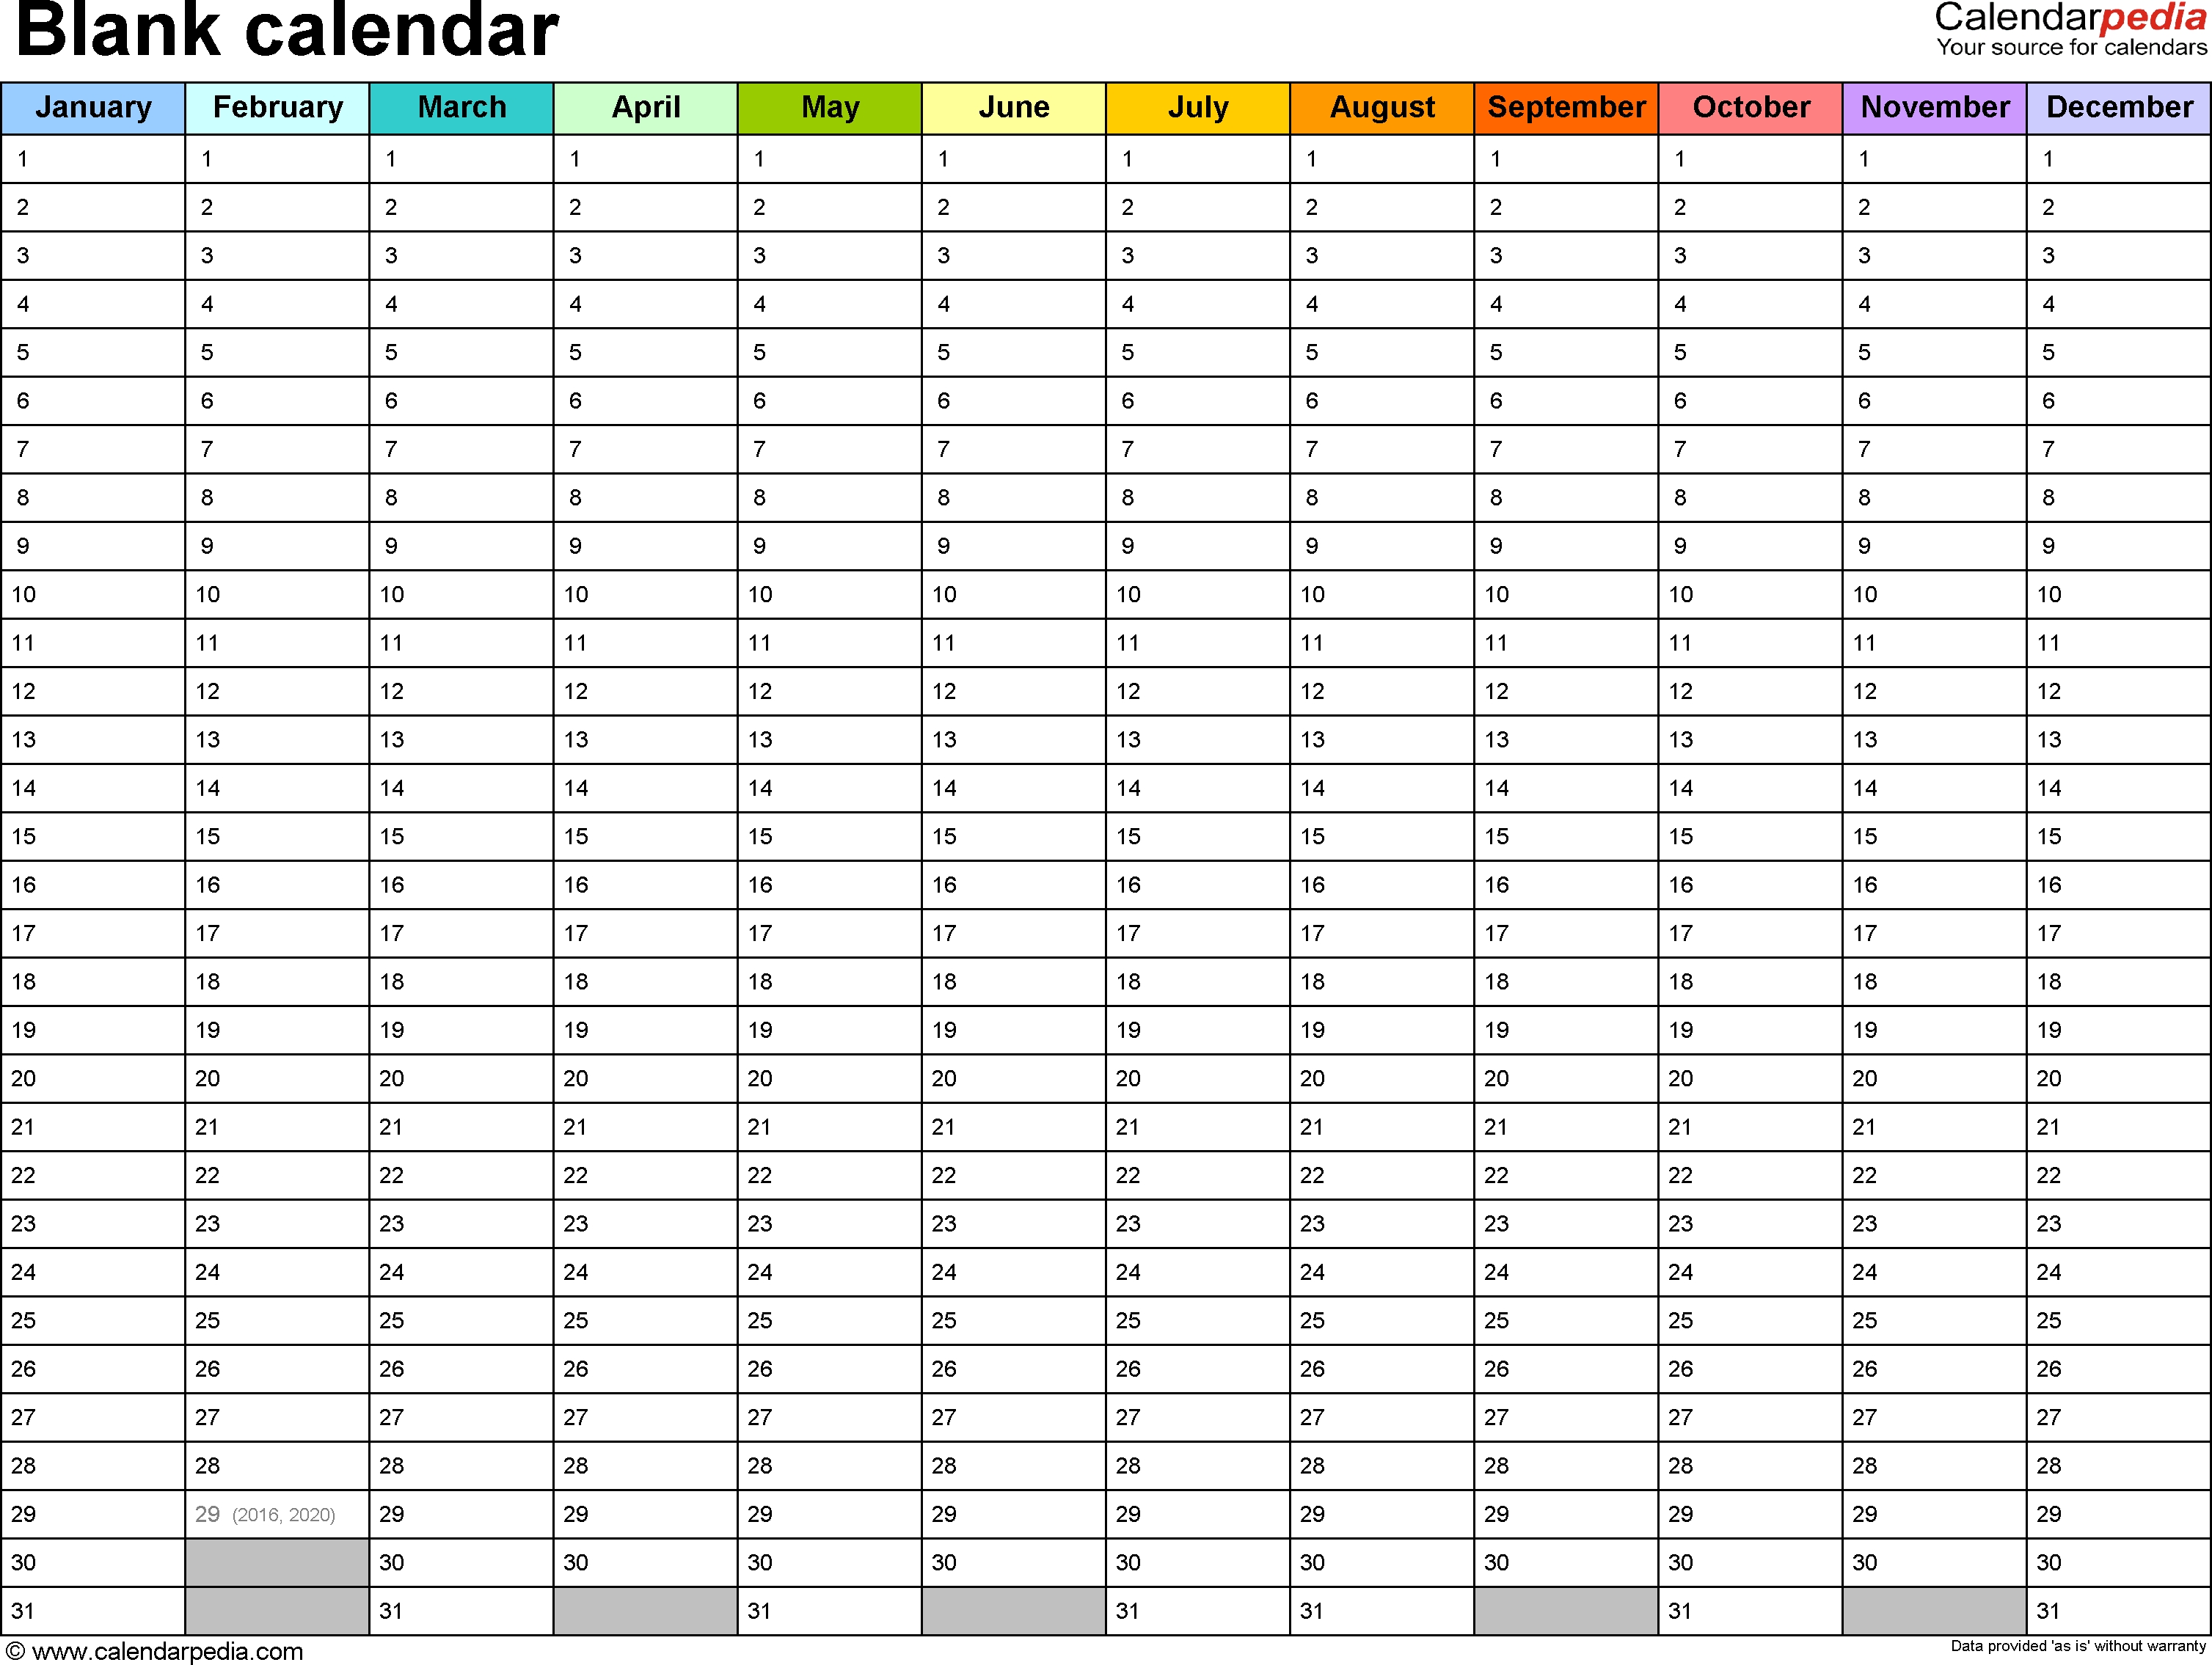 Blank Calendar - 9 Free Printable Microsoft Word Templates within Free Blank Calendar Templates To Print